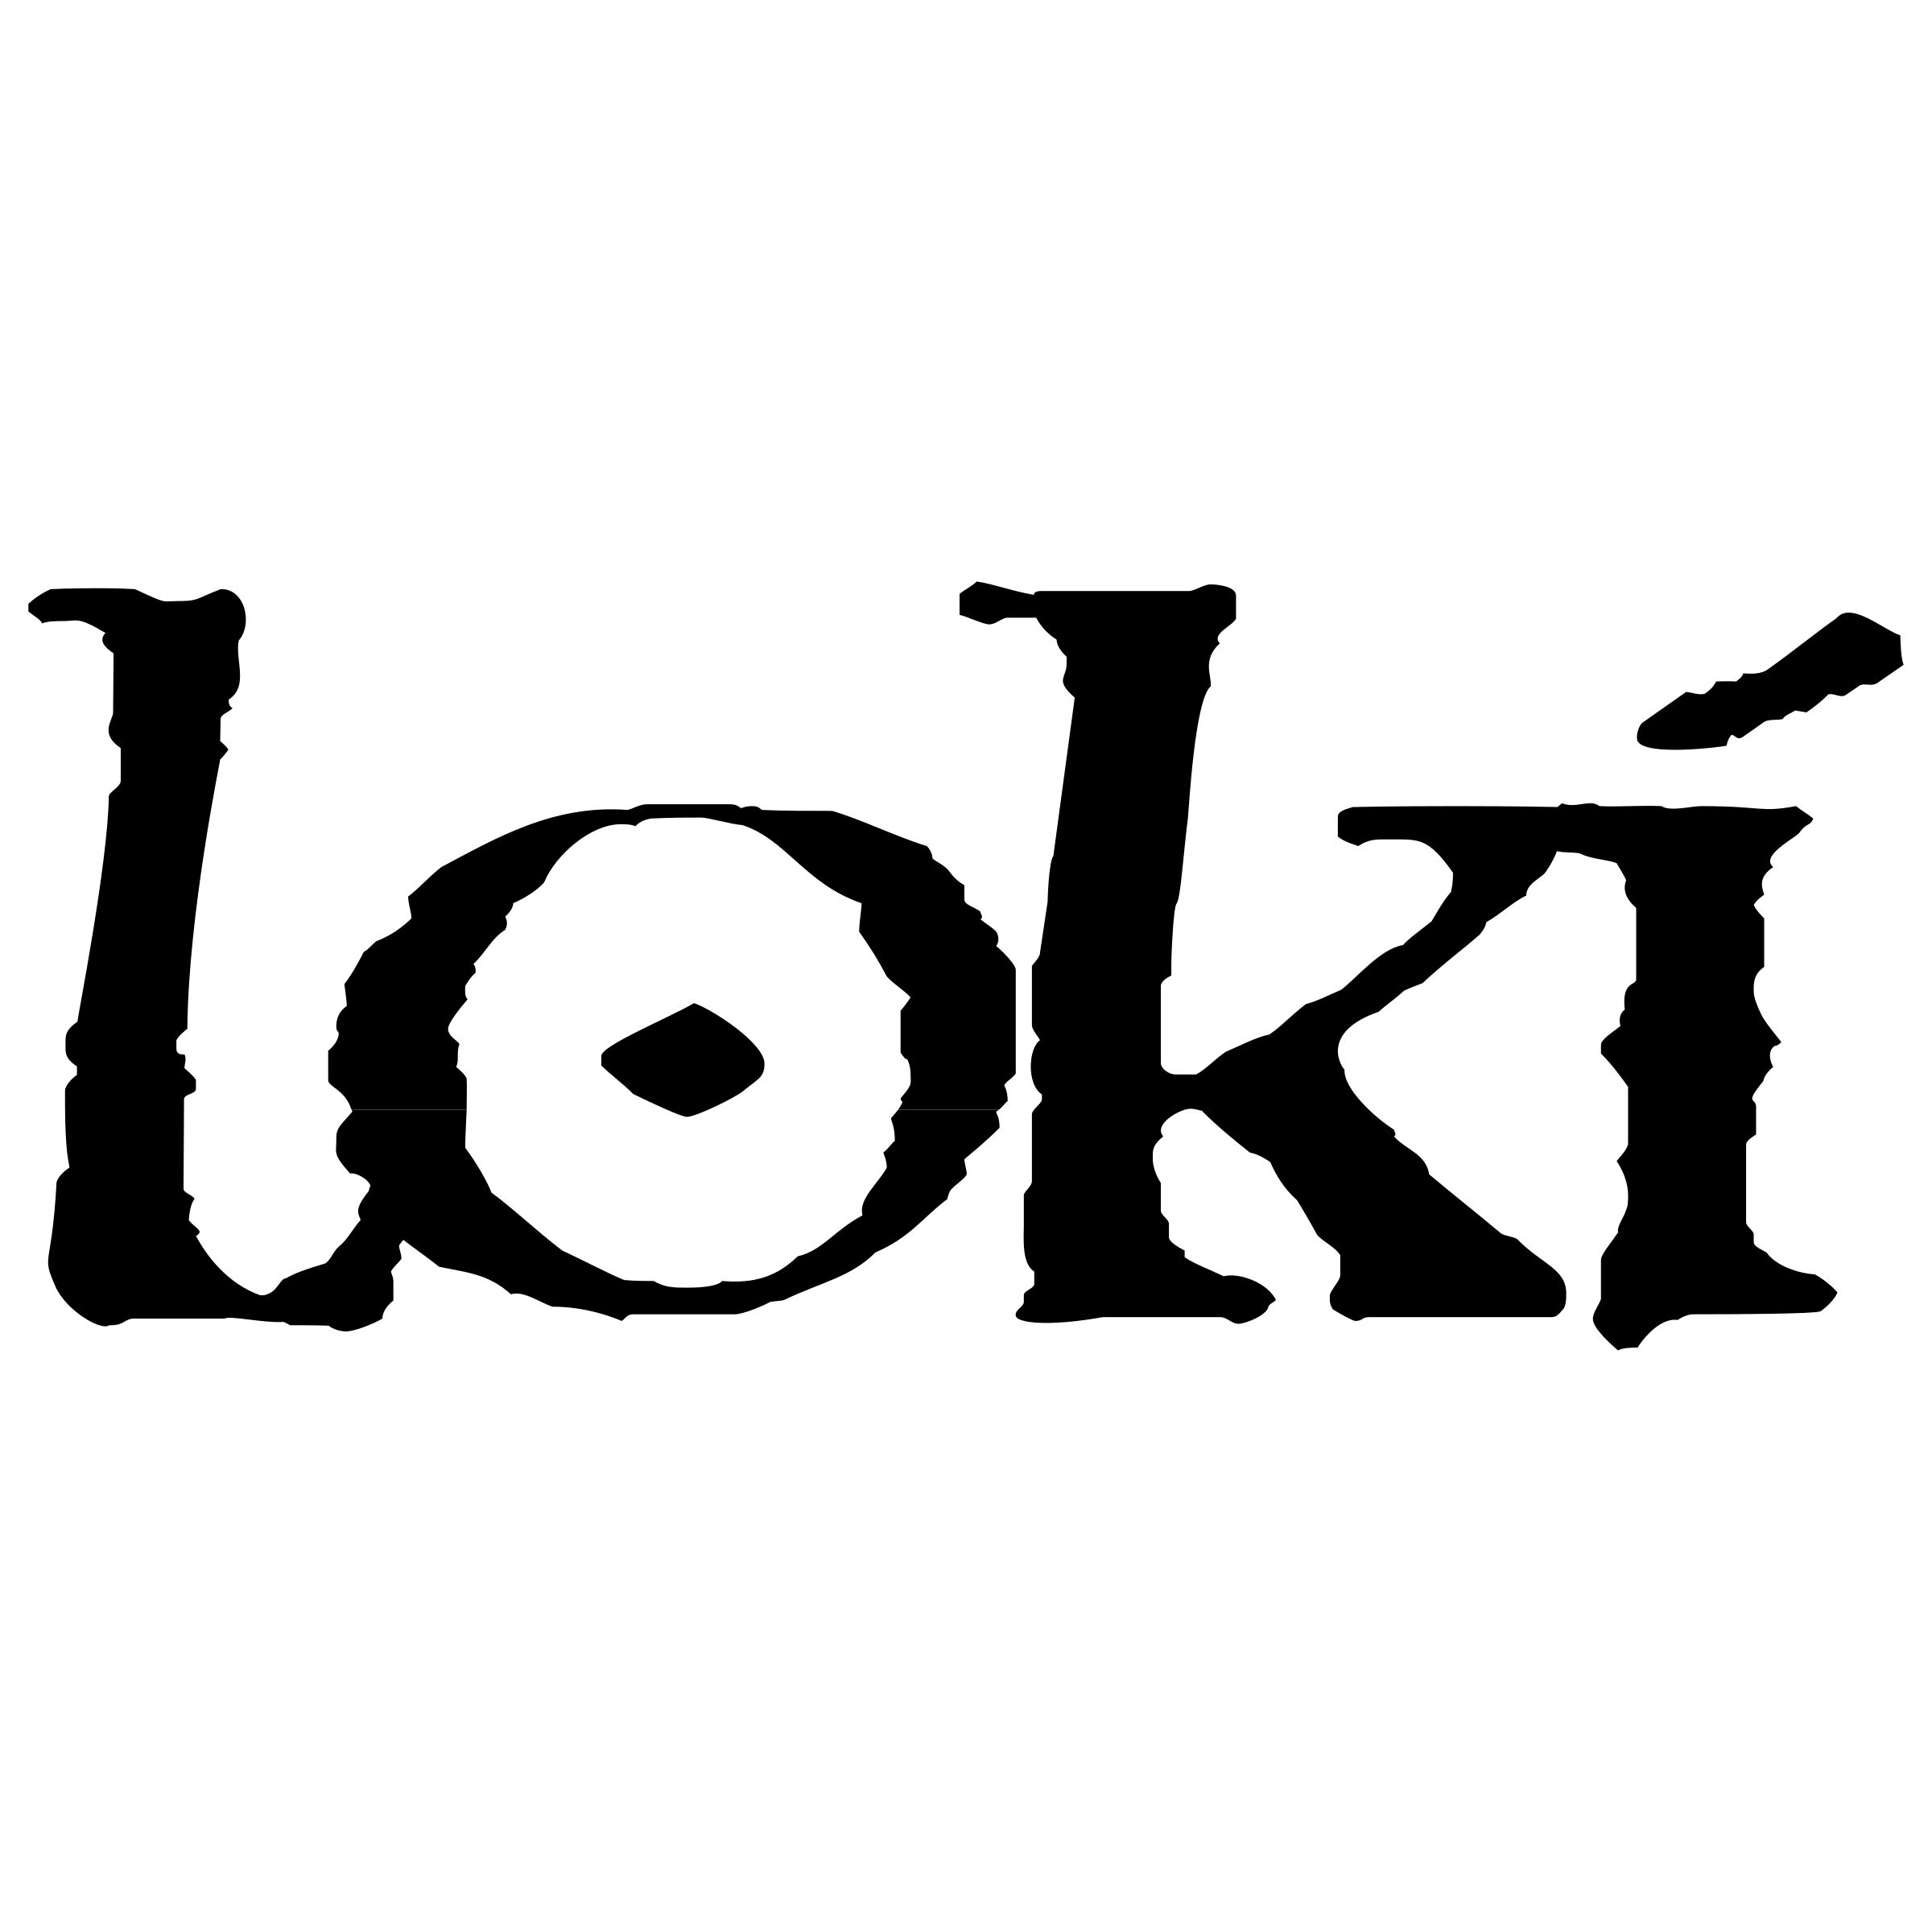 Black and White Loki Logo - Loki Logo PNG Transparent & SVG Vector - Freebie Supply